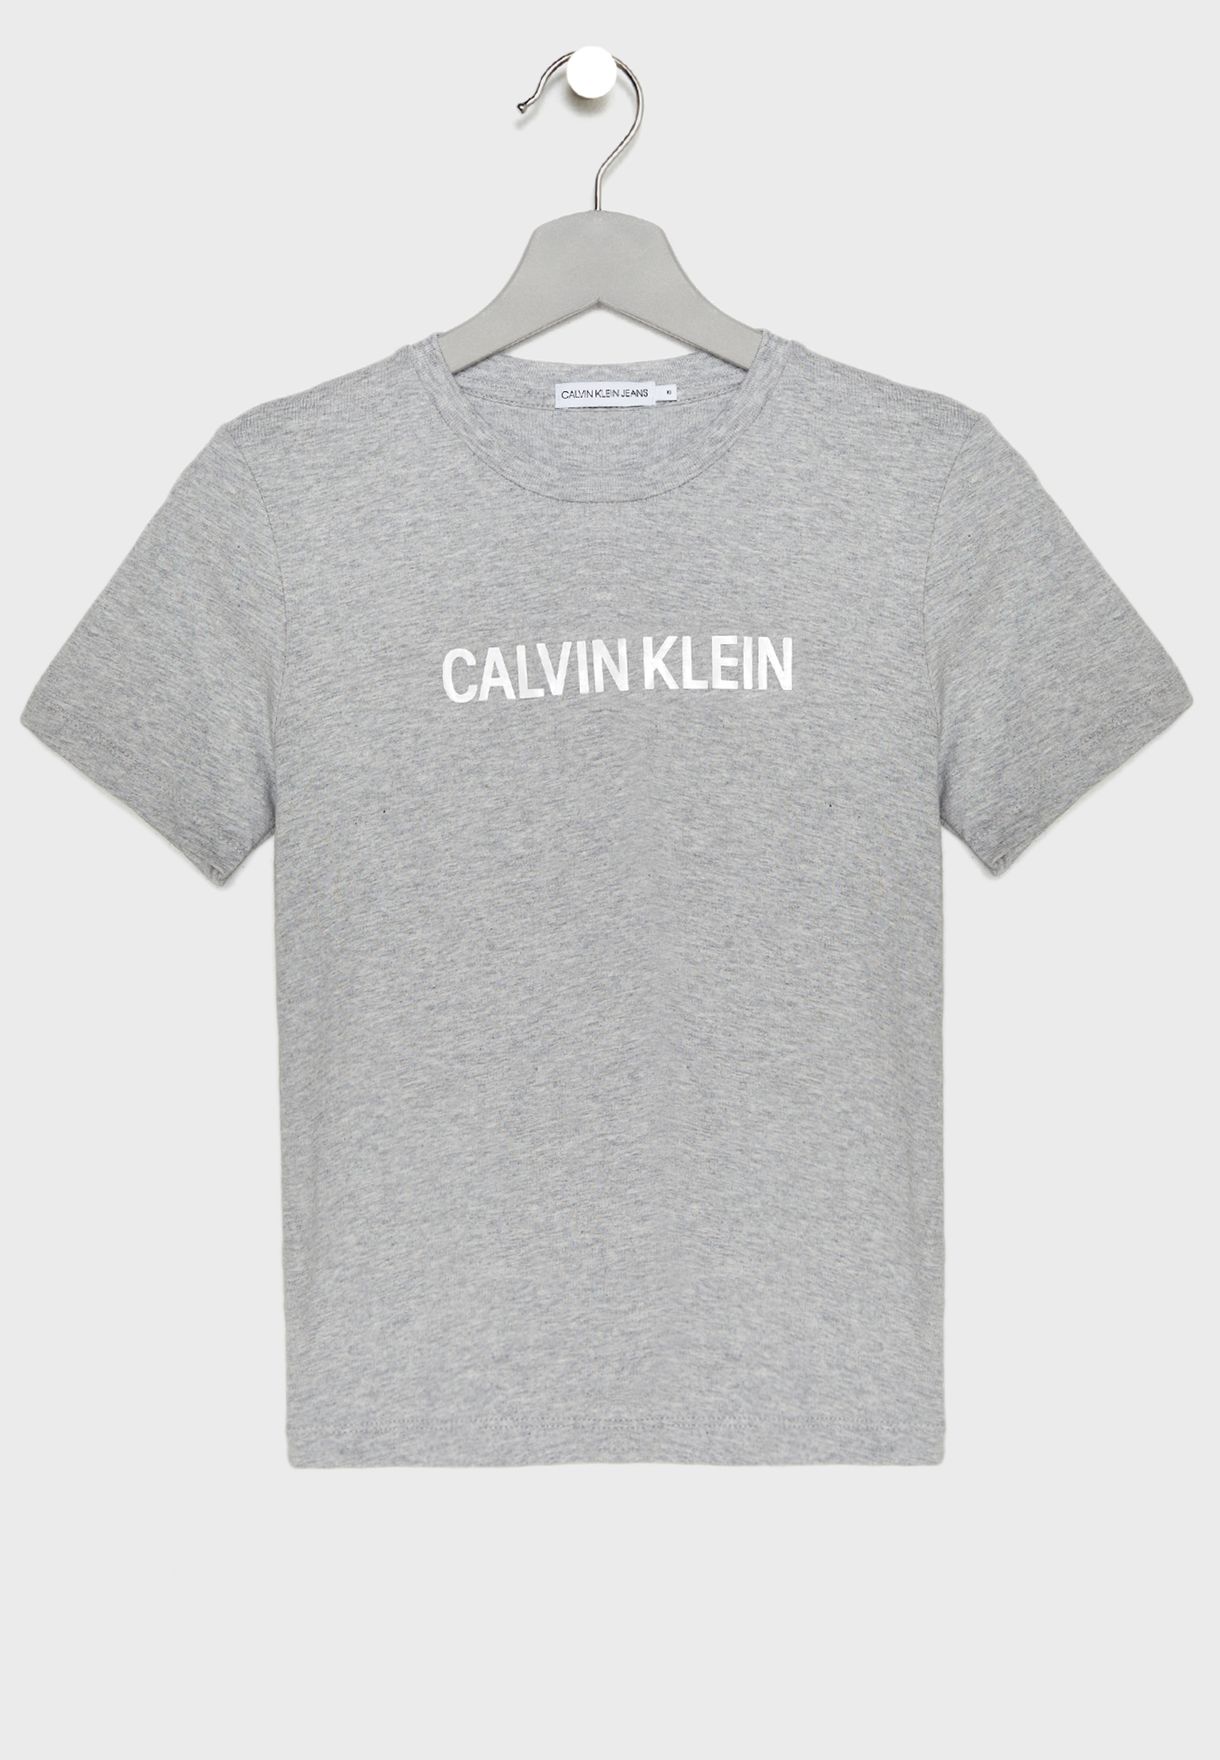 calvin klein kids shirt